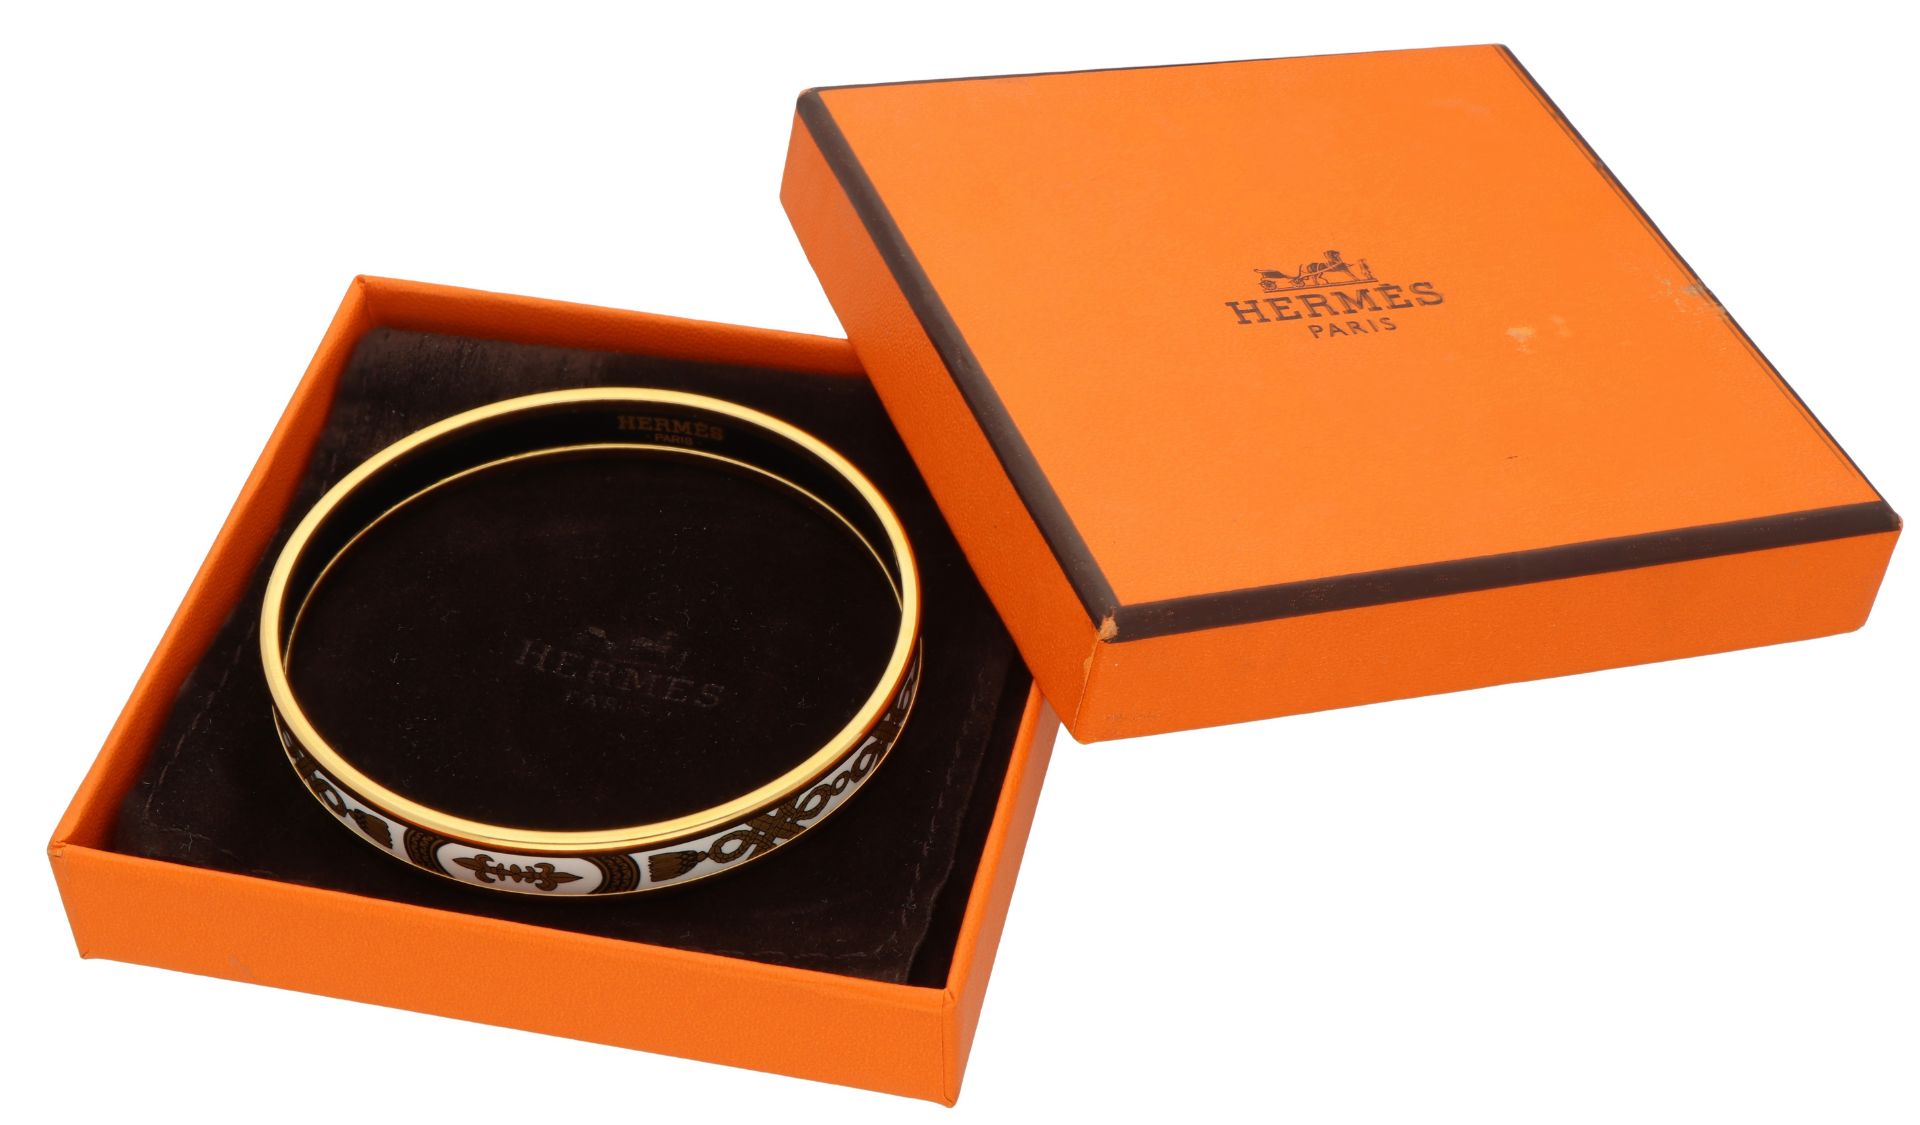 No Reserve - Hermès steel bangle bracelet with white enamel. - Image 3 of 6